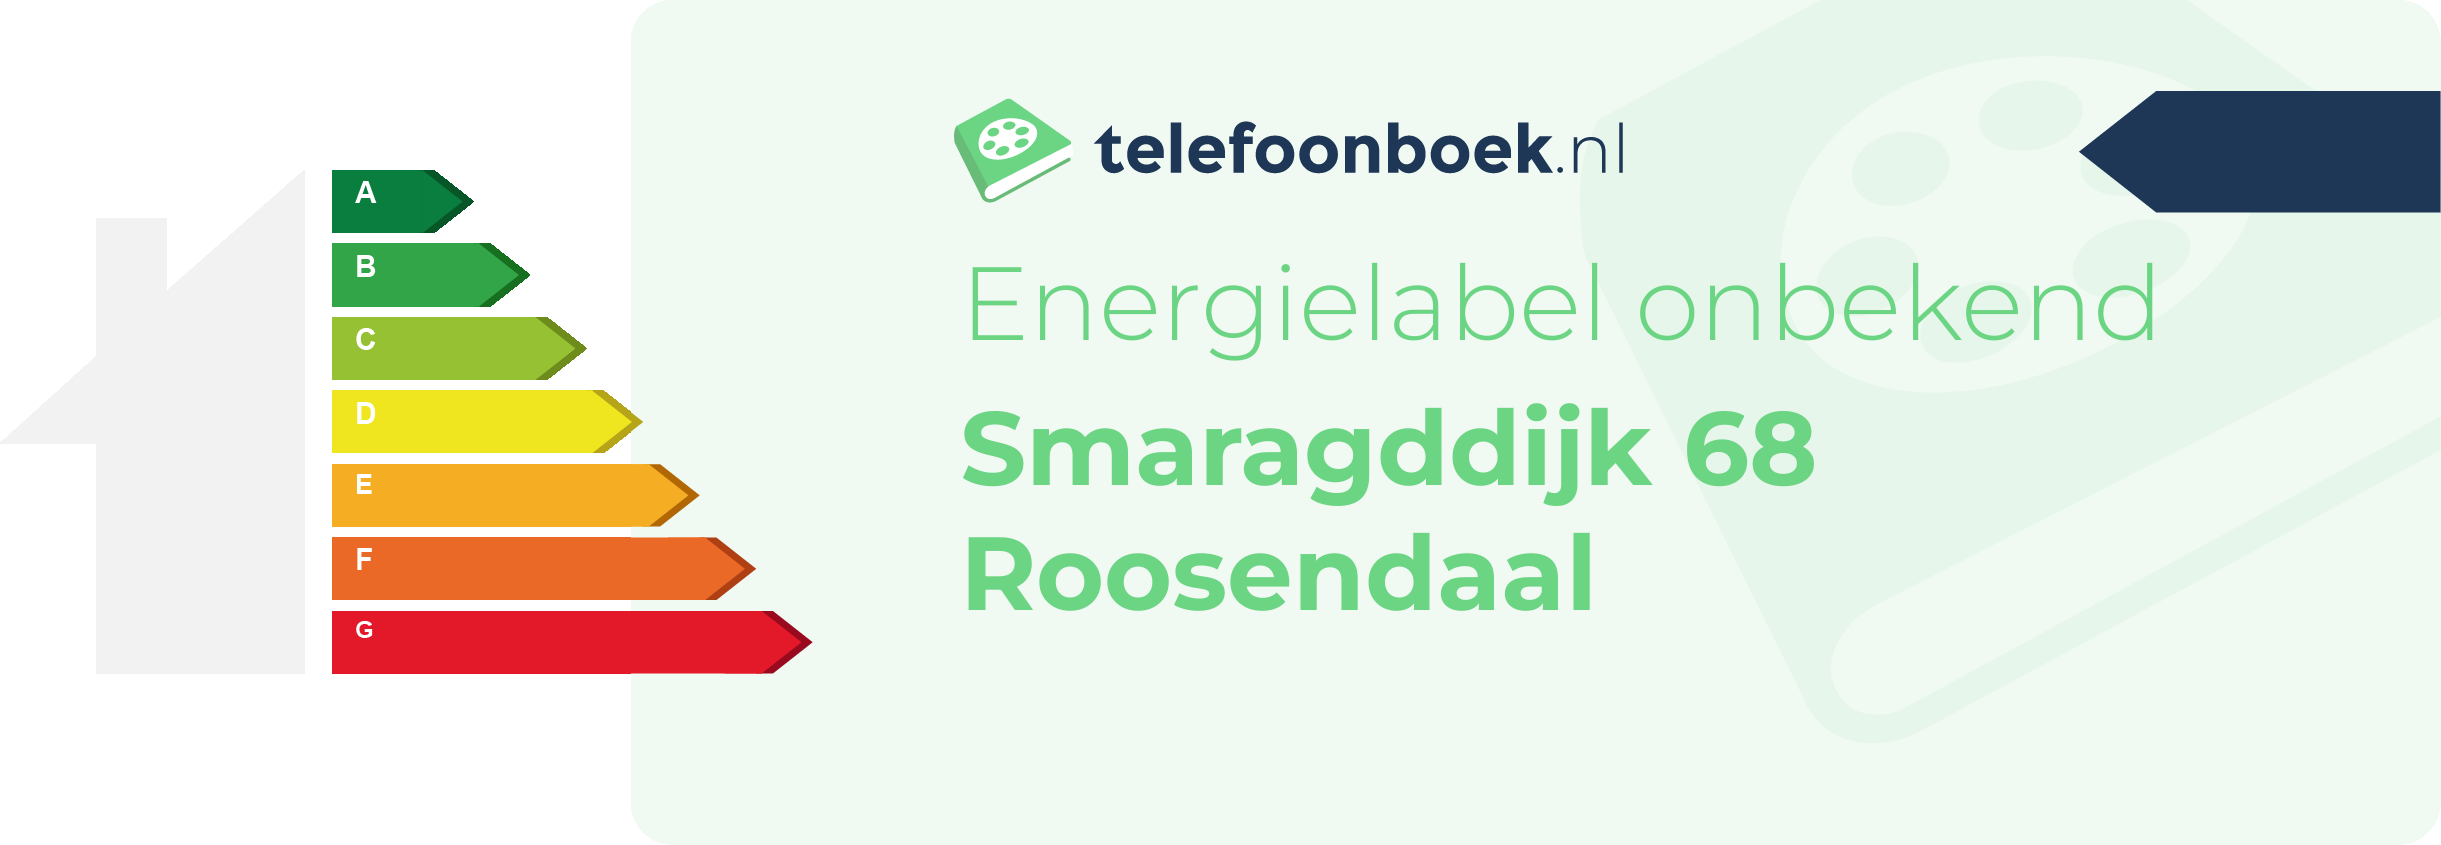 Energielabel Smaragddijk 68 Roosendaal